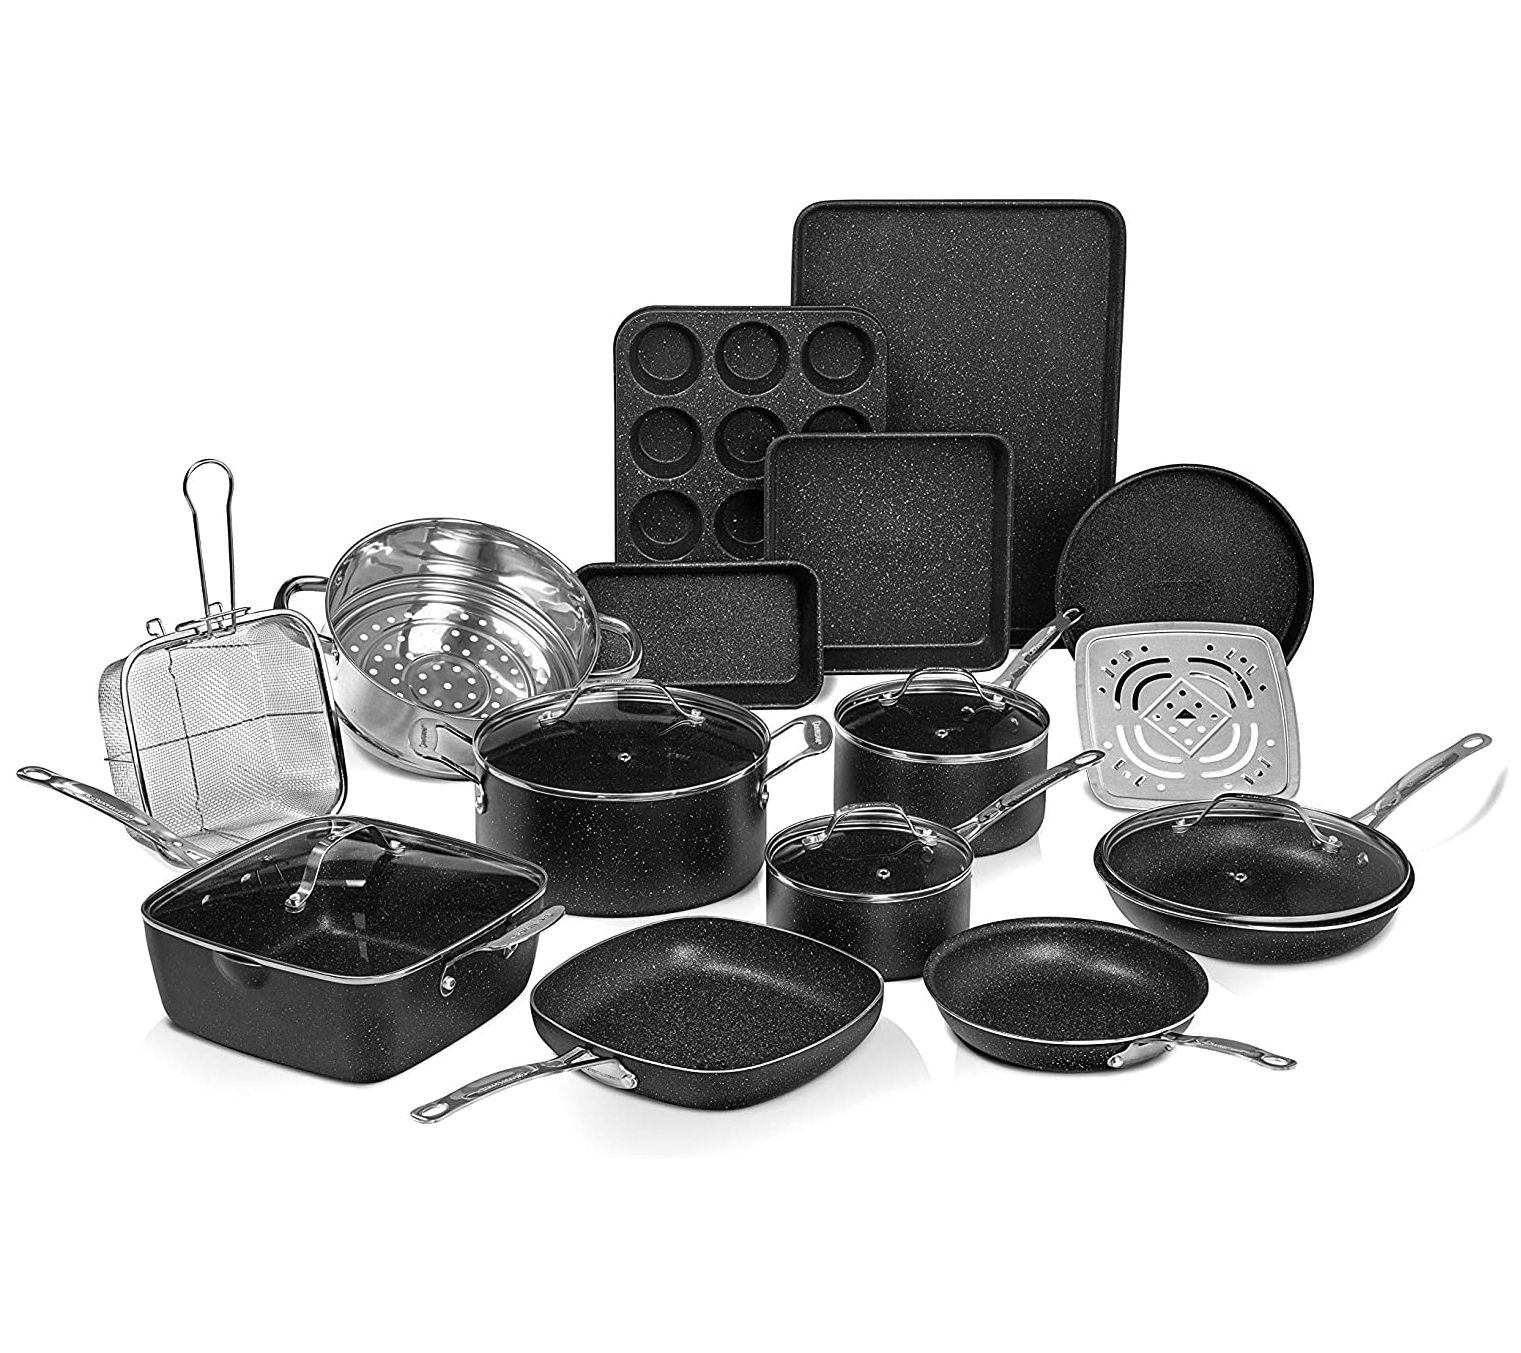 Granitestone Blue 20-Pc Nonstick Pots and Pans Complete Cookware Set